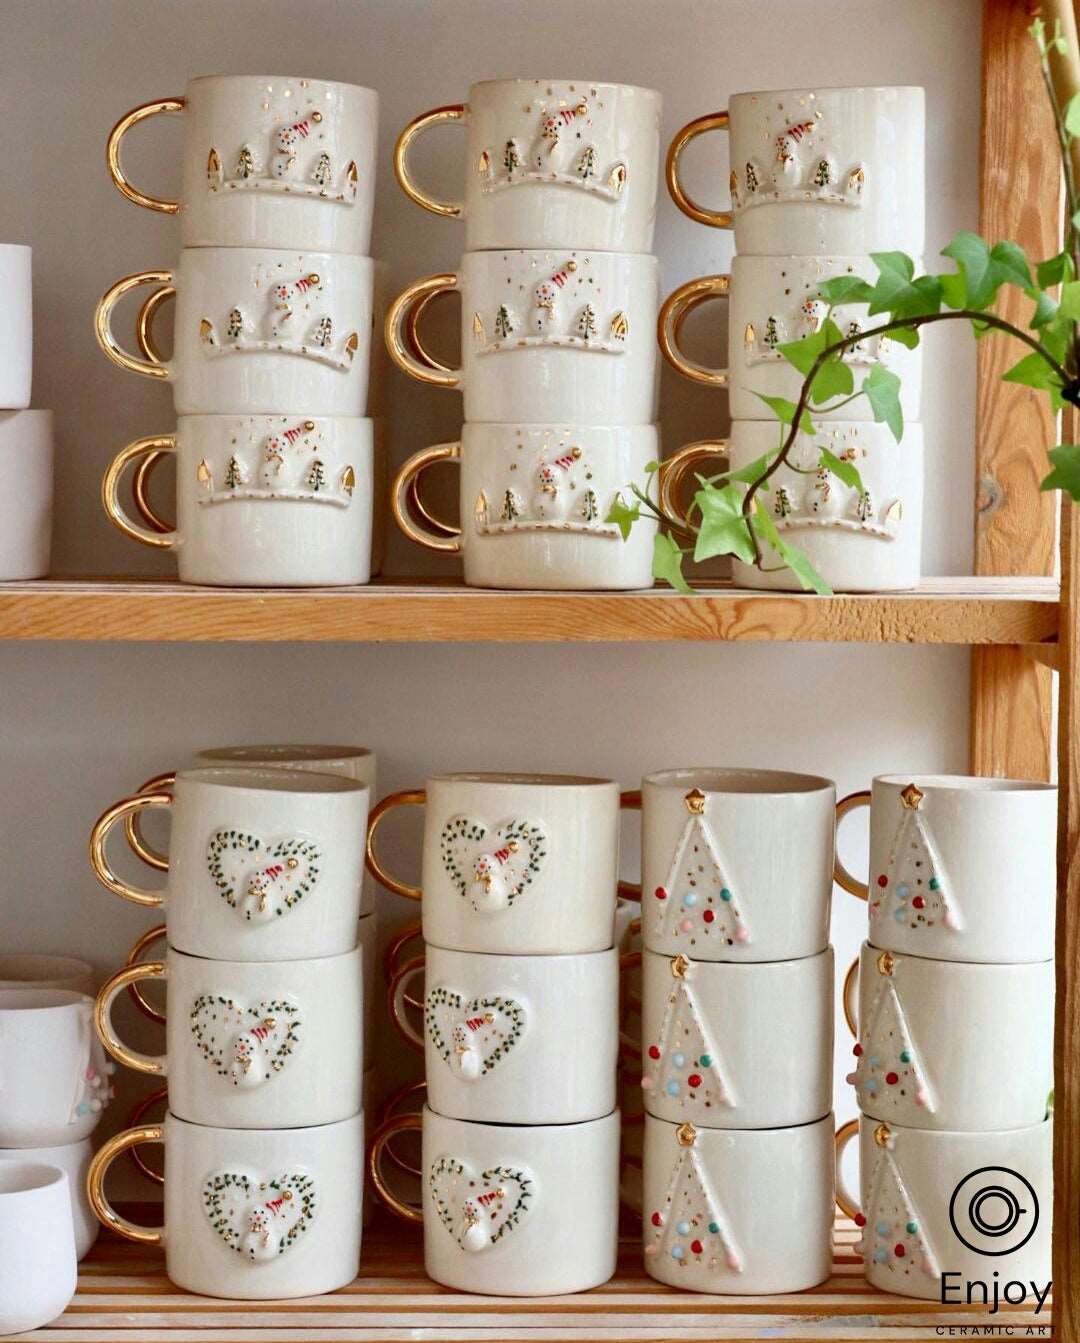 16 oz White Tall Ceramic Latte Mug | Plum Grove